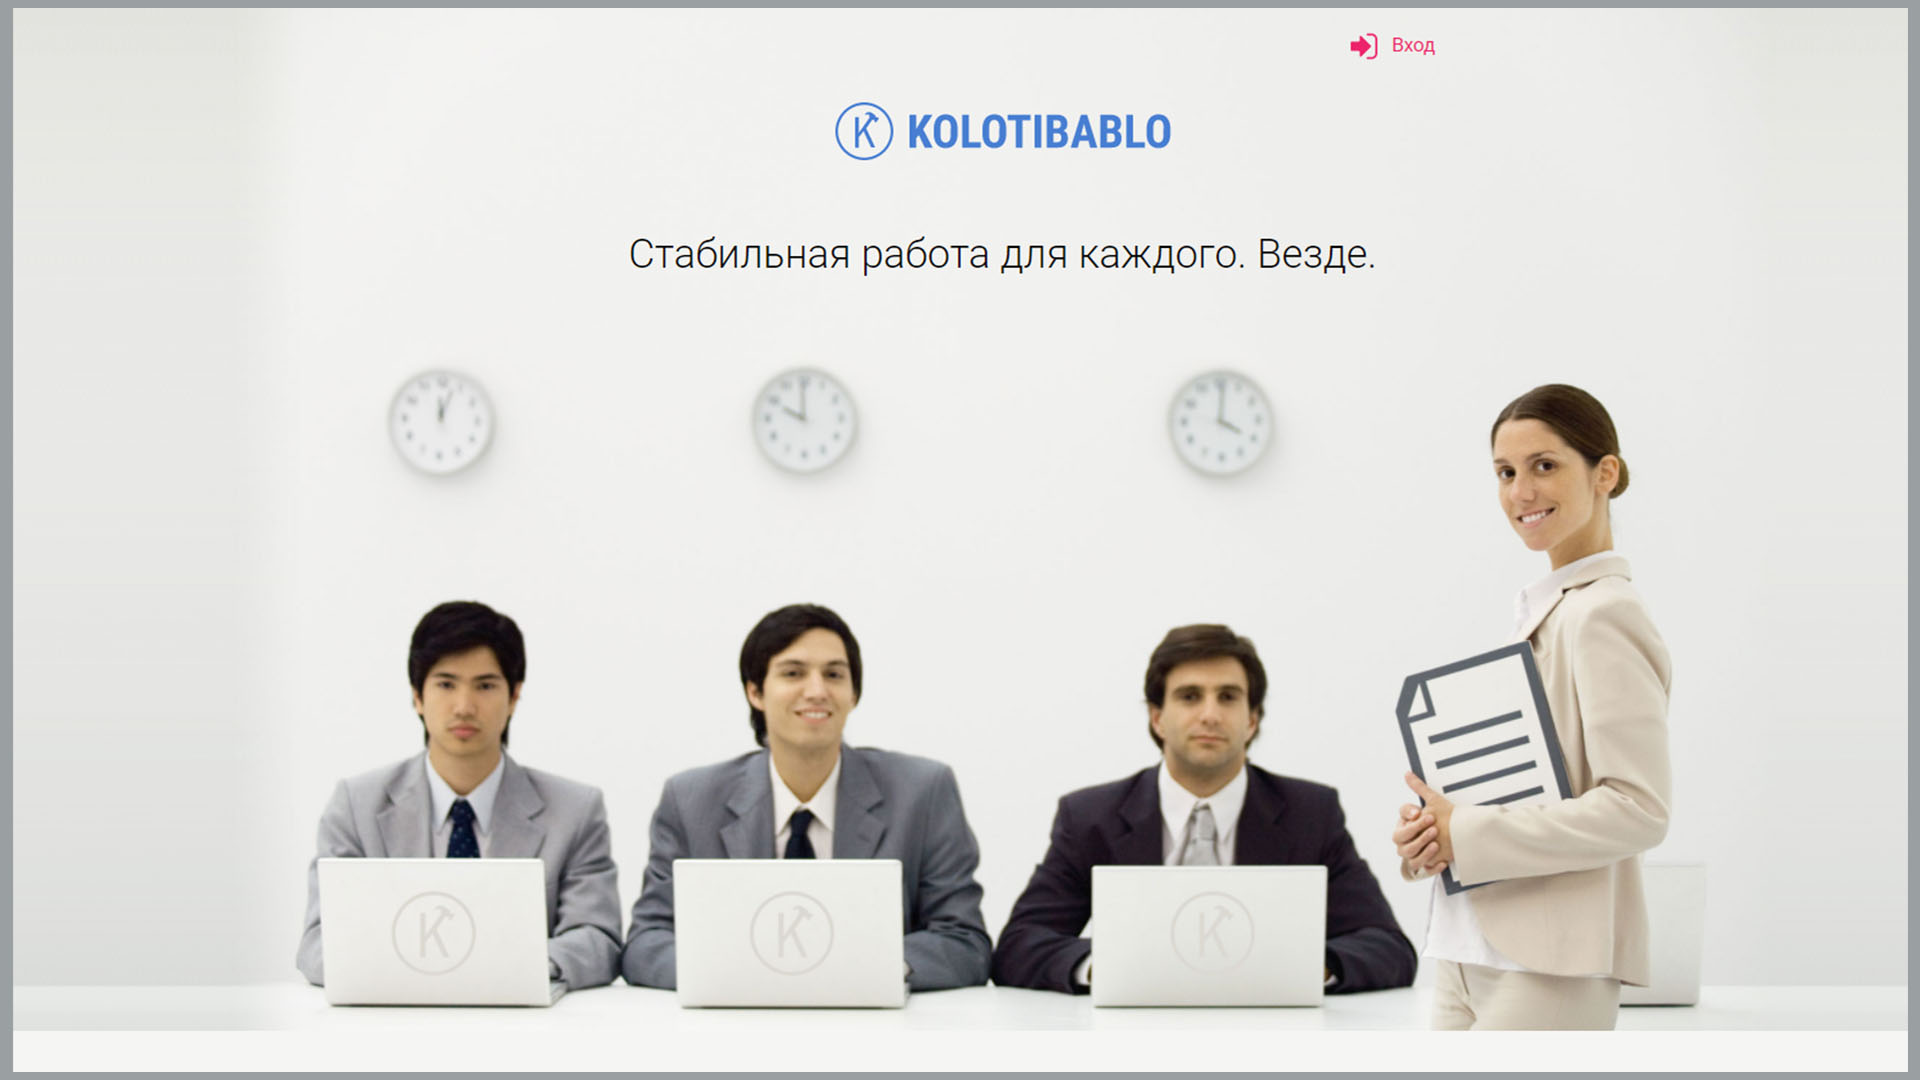 Скриншот сервиса Kolotibablo с предложением работы.